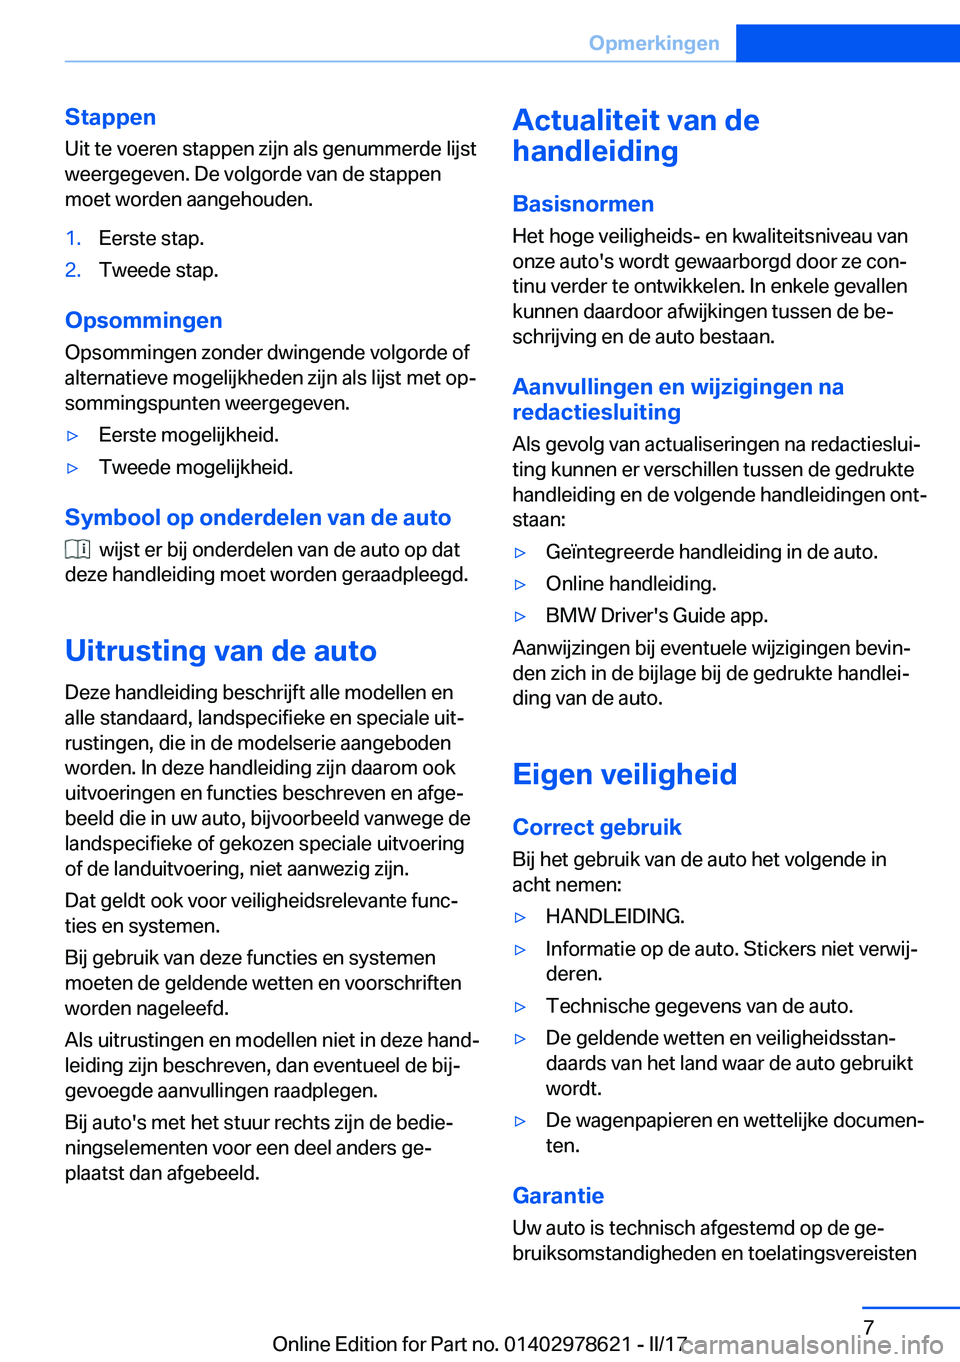 BMW 7 SERIES 2018  Instructieboekjes (in Dutch) �S�t�a�p�p�e�n
�U�i�t� �t�e� �v�o�e�r�e�n� �s�t�a�p�p�e�n� �z�i�j�n� �a�l�s� �g�e�n�u�m�m�e�r�d�e� �l�i�j�s�t �w�e�e�r�g�e�g�e�v�e�n�.� �D�e� �v�o�l�g�o�r�d�e� �v�a�n� �d�e� �s�t�a�p�p�e�n�m�o�e�t� �w